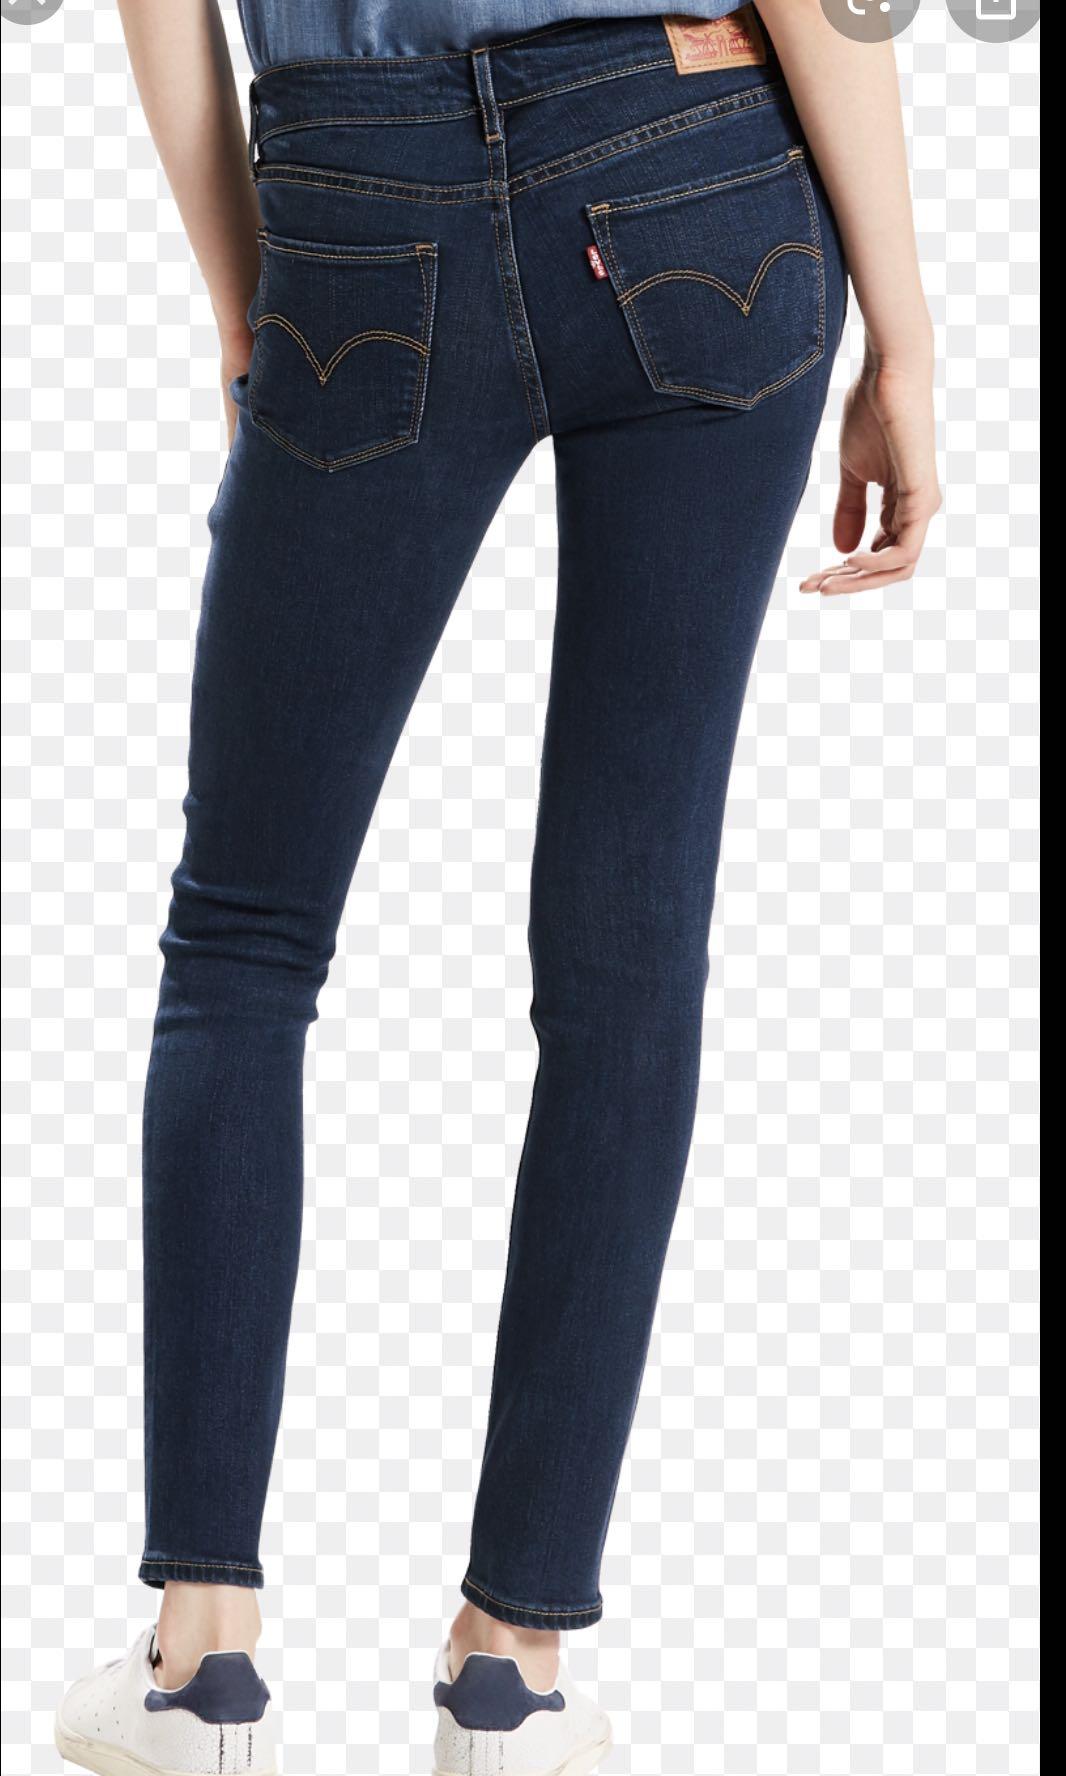 Levi's 711 Skinny Jeans - Size 27 